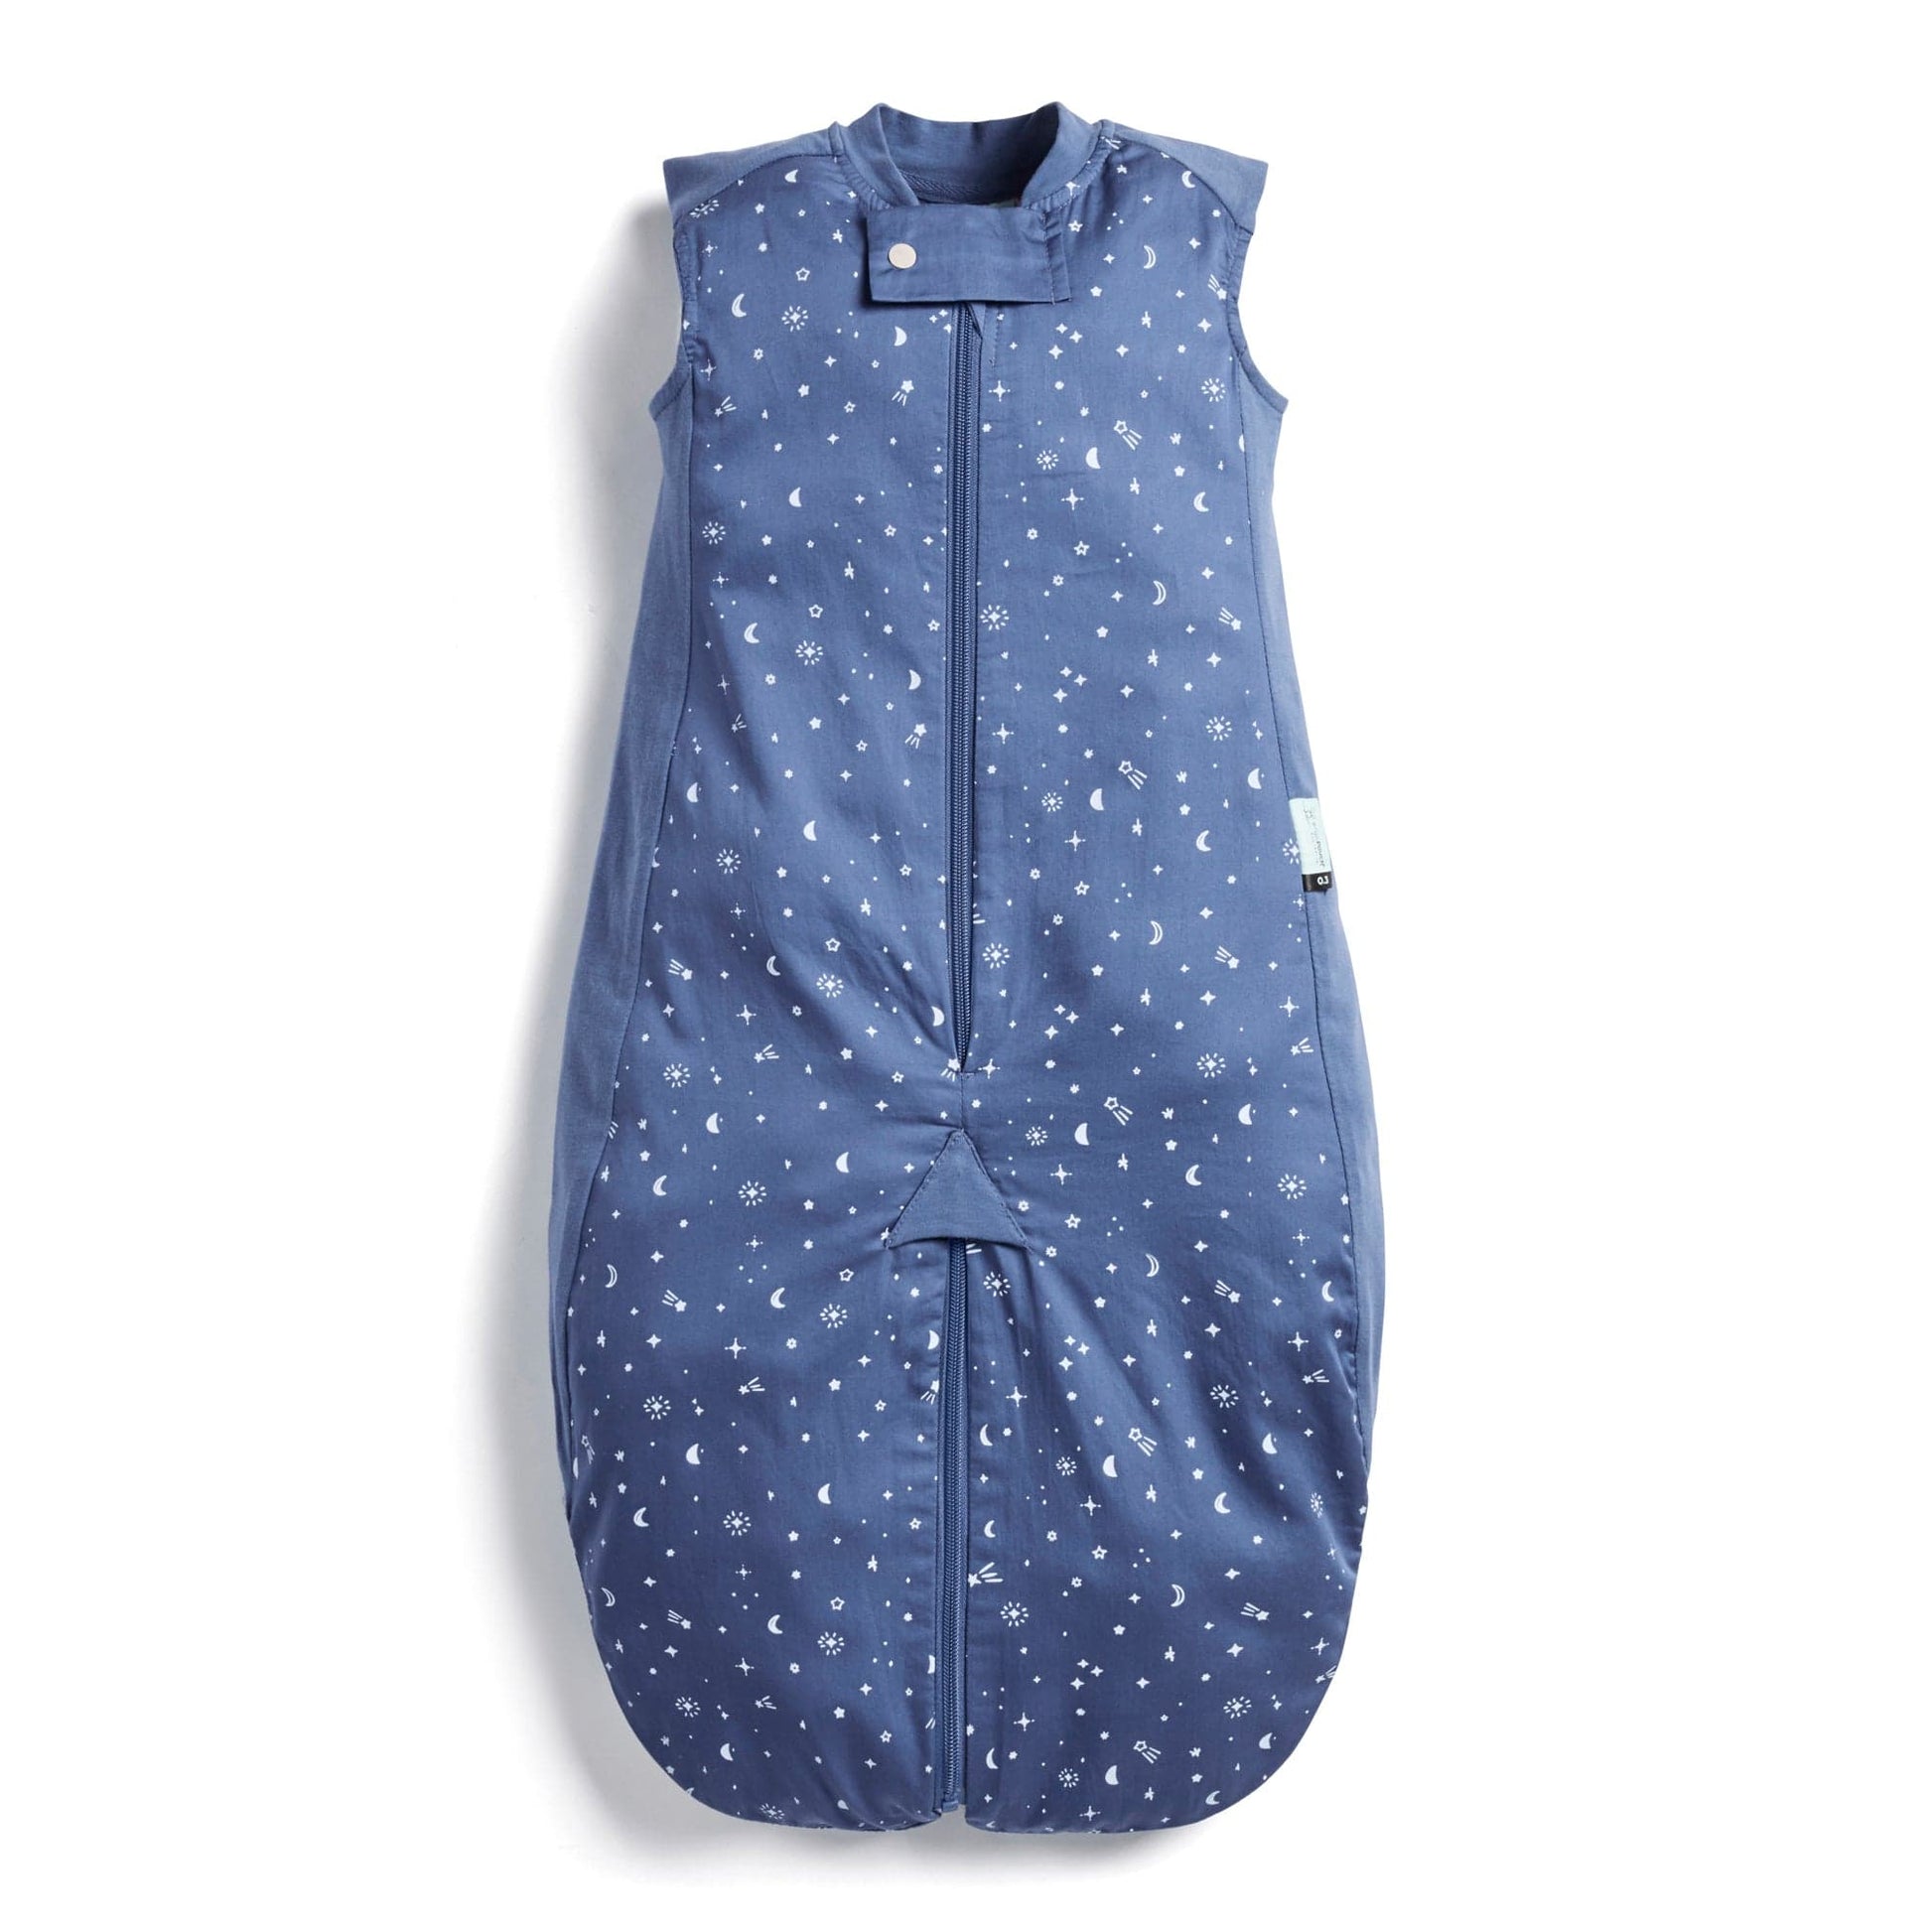 ErgoPouch - Sleep Suit Bag - Night Sky - 0.3 TOG - Stylemykid.com